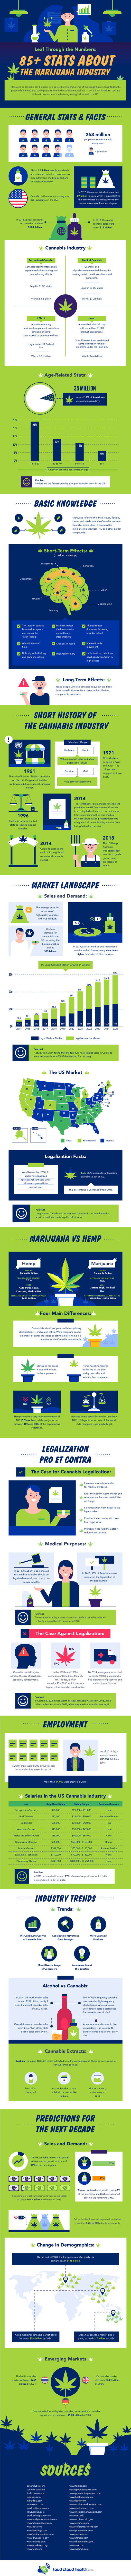 infographic-cannabis-statistics-2020